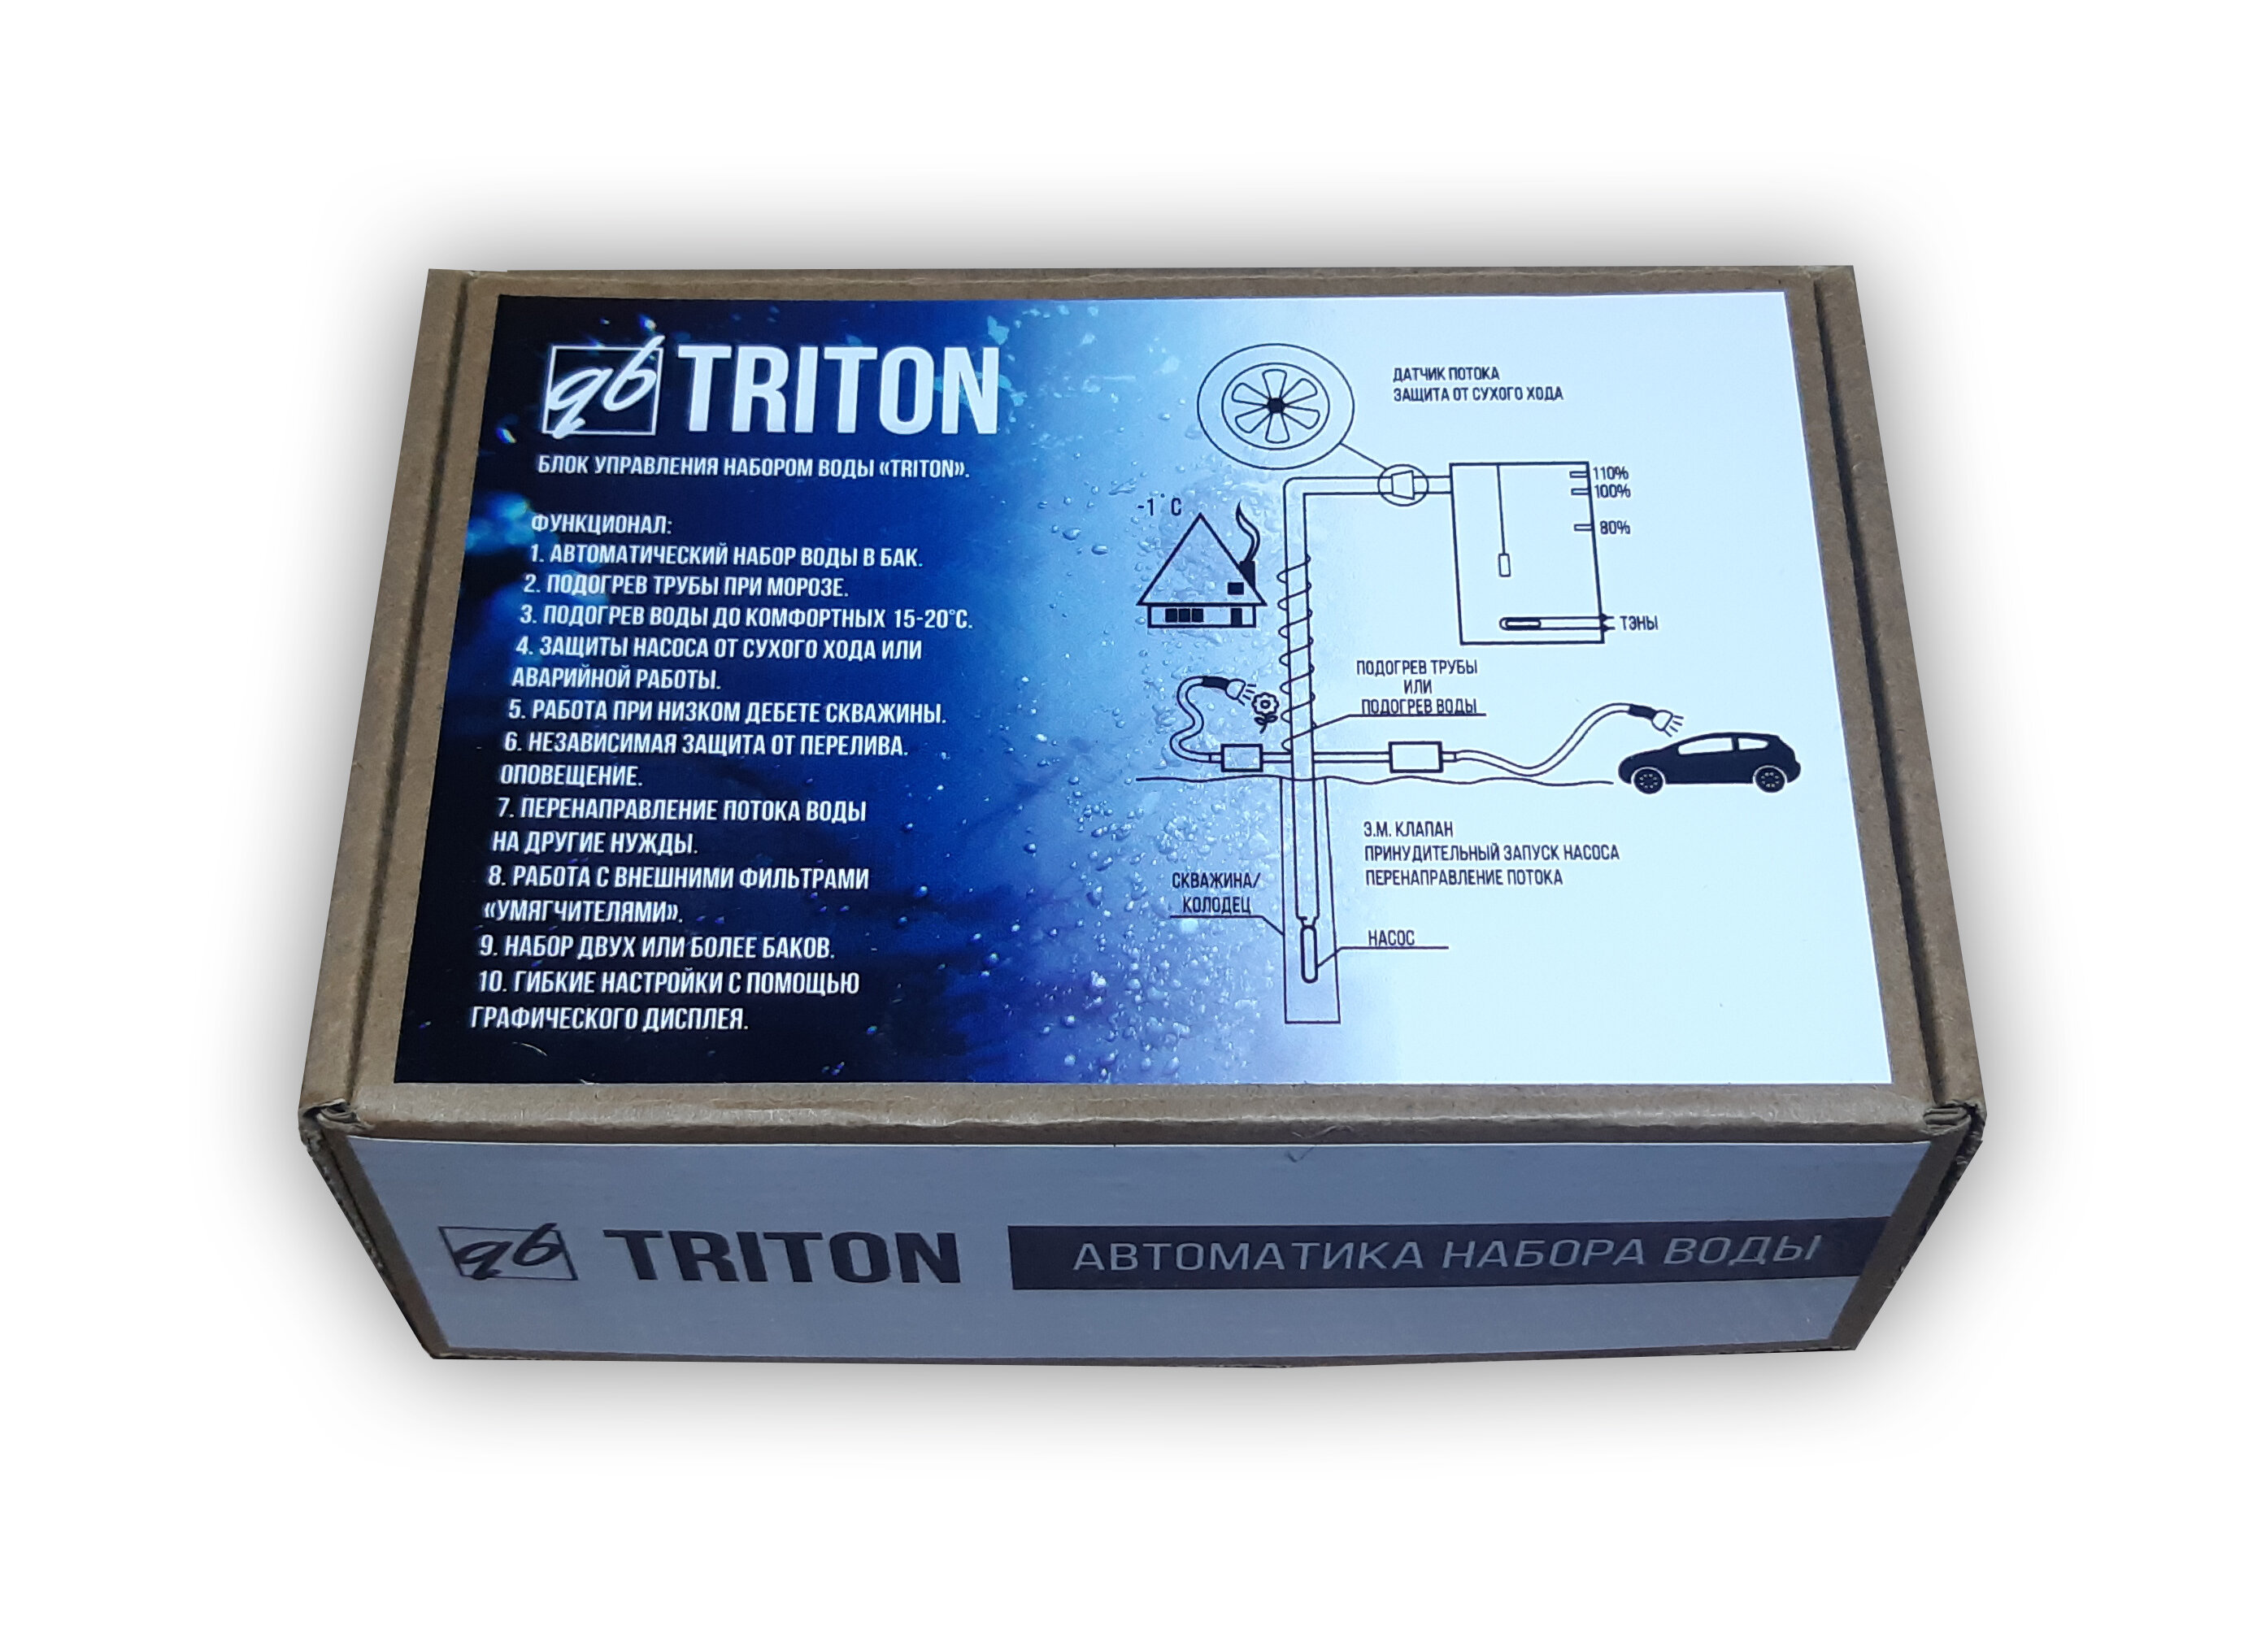 QB Triton - автоматика набора воды - фотография № 2